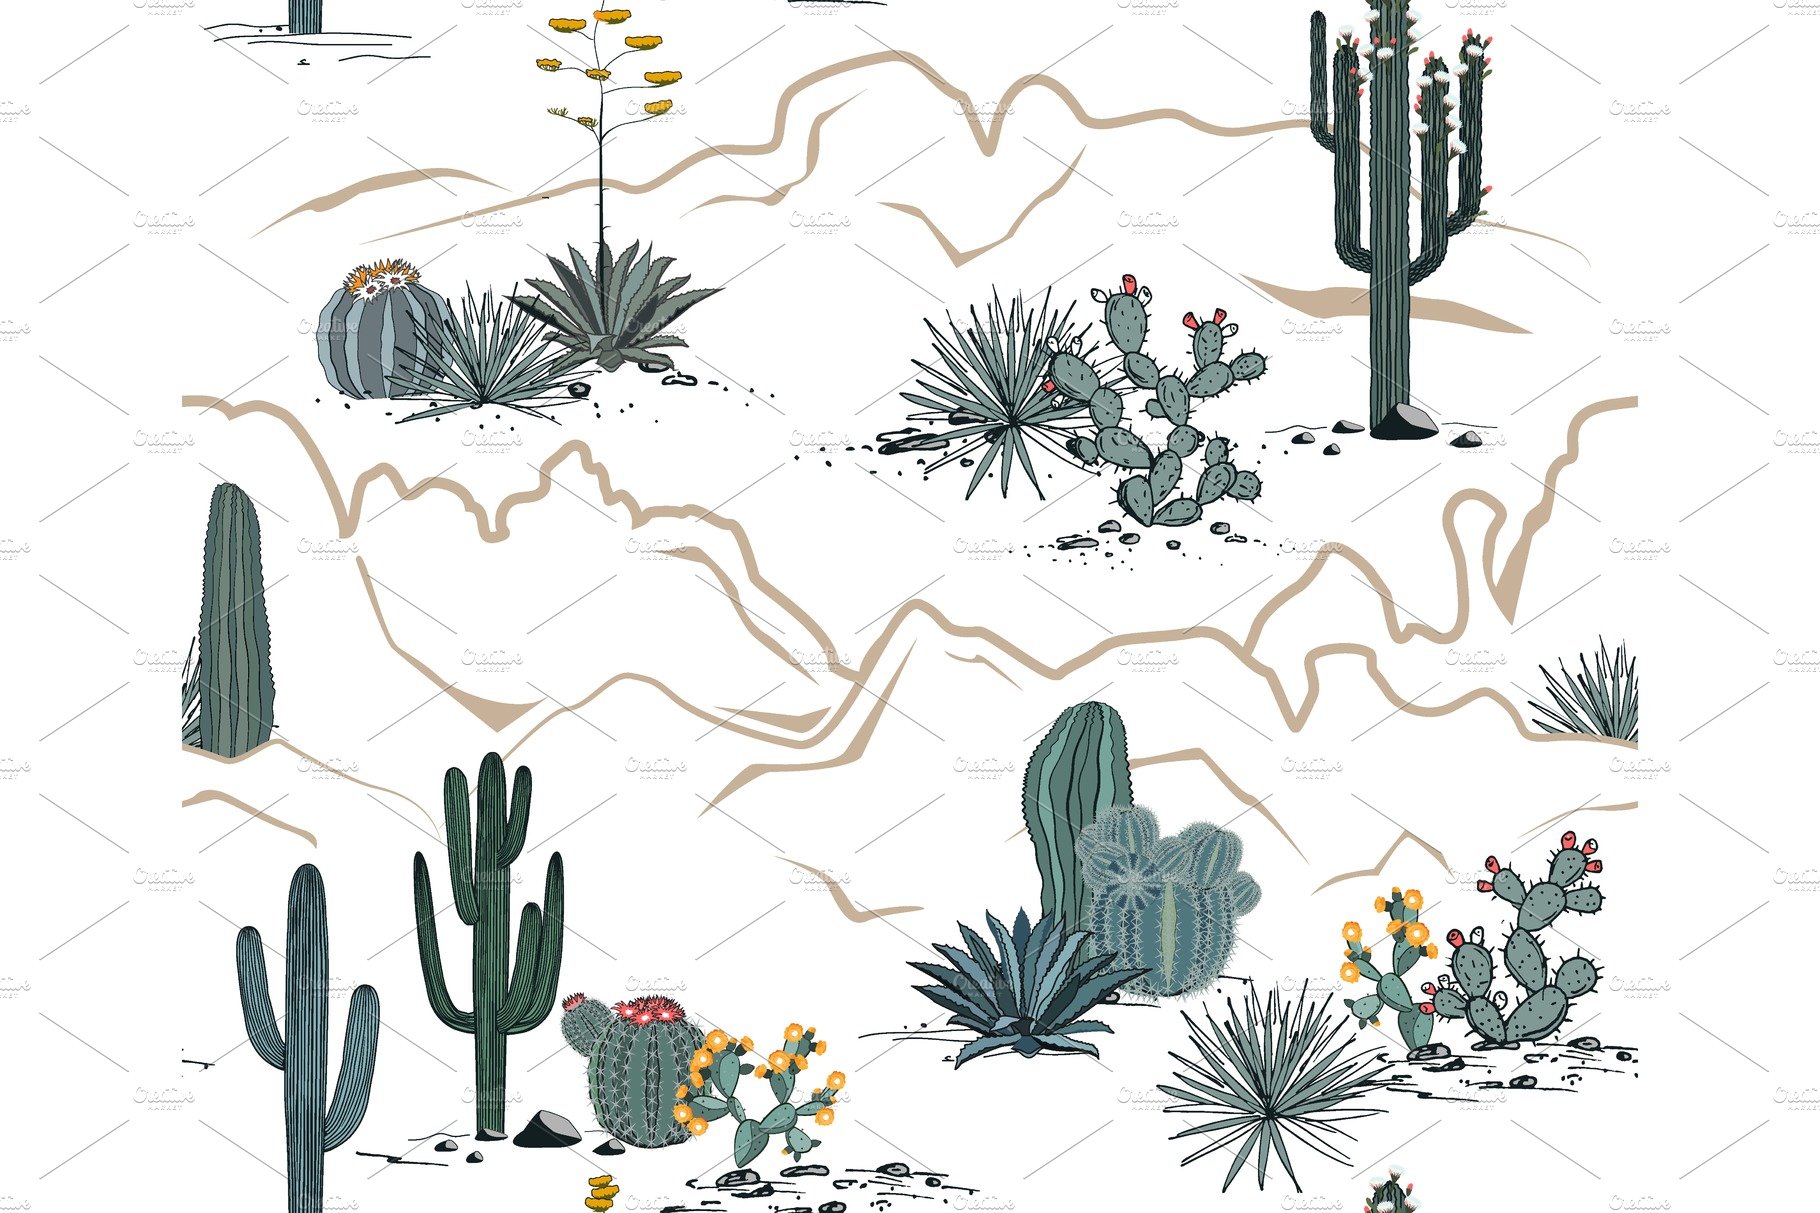 Desert scene with cacti and cactus plants.